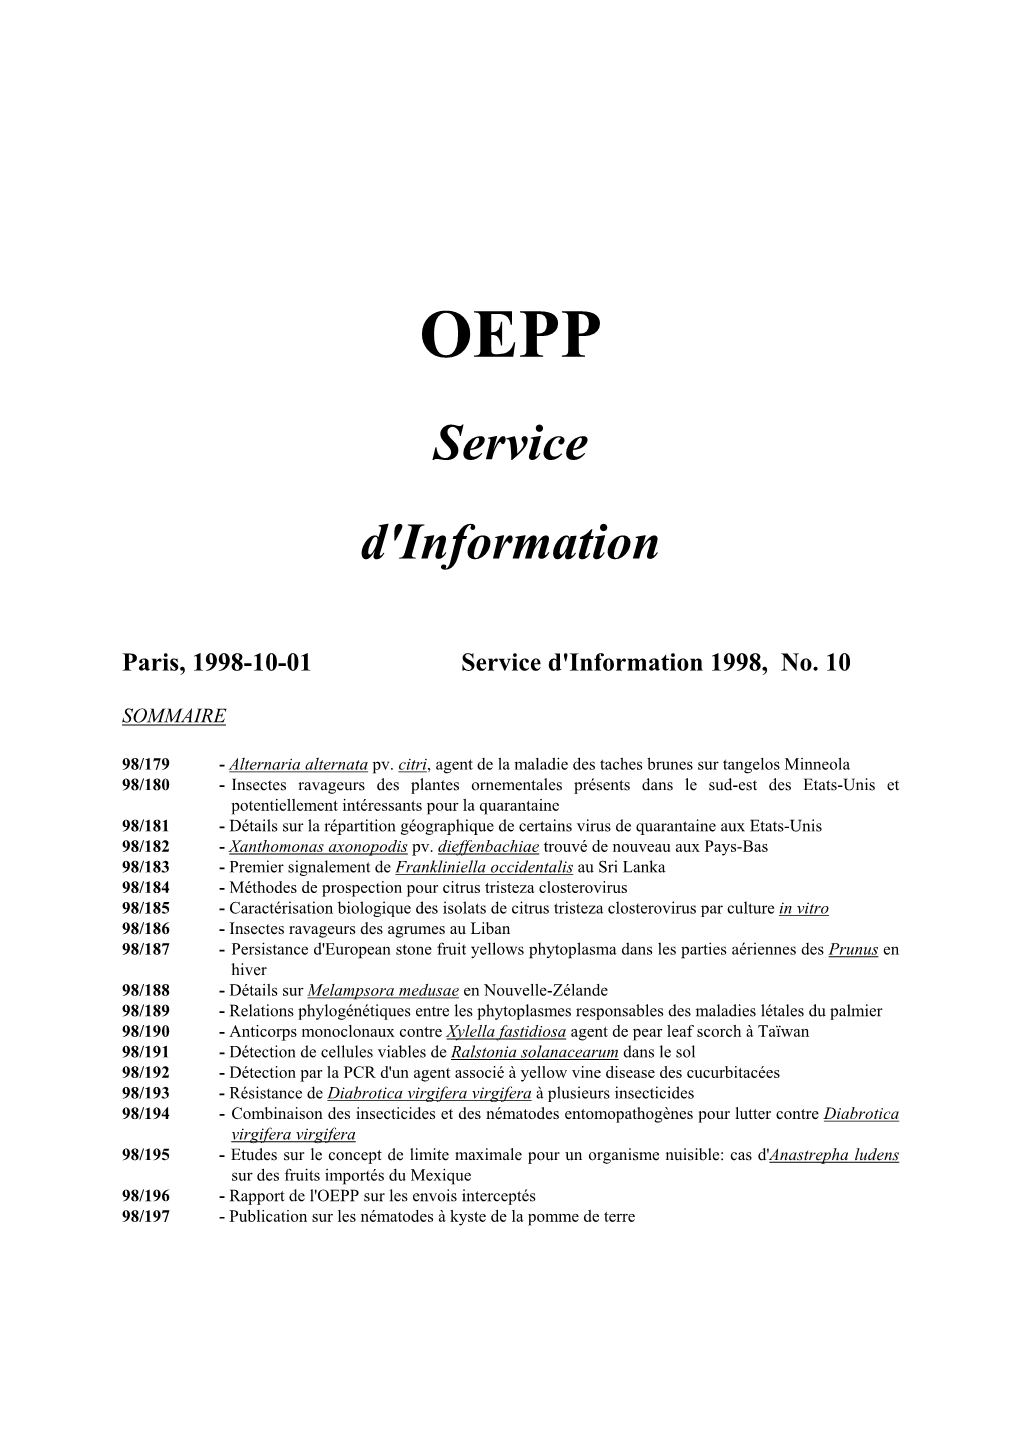 Service D'information 1998, No